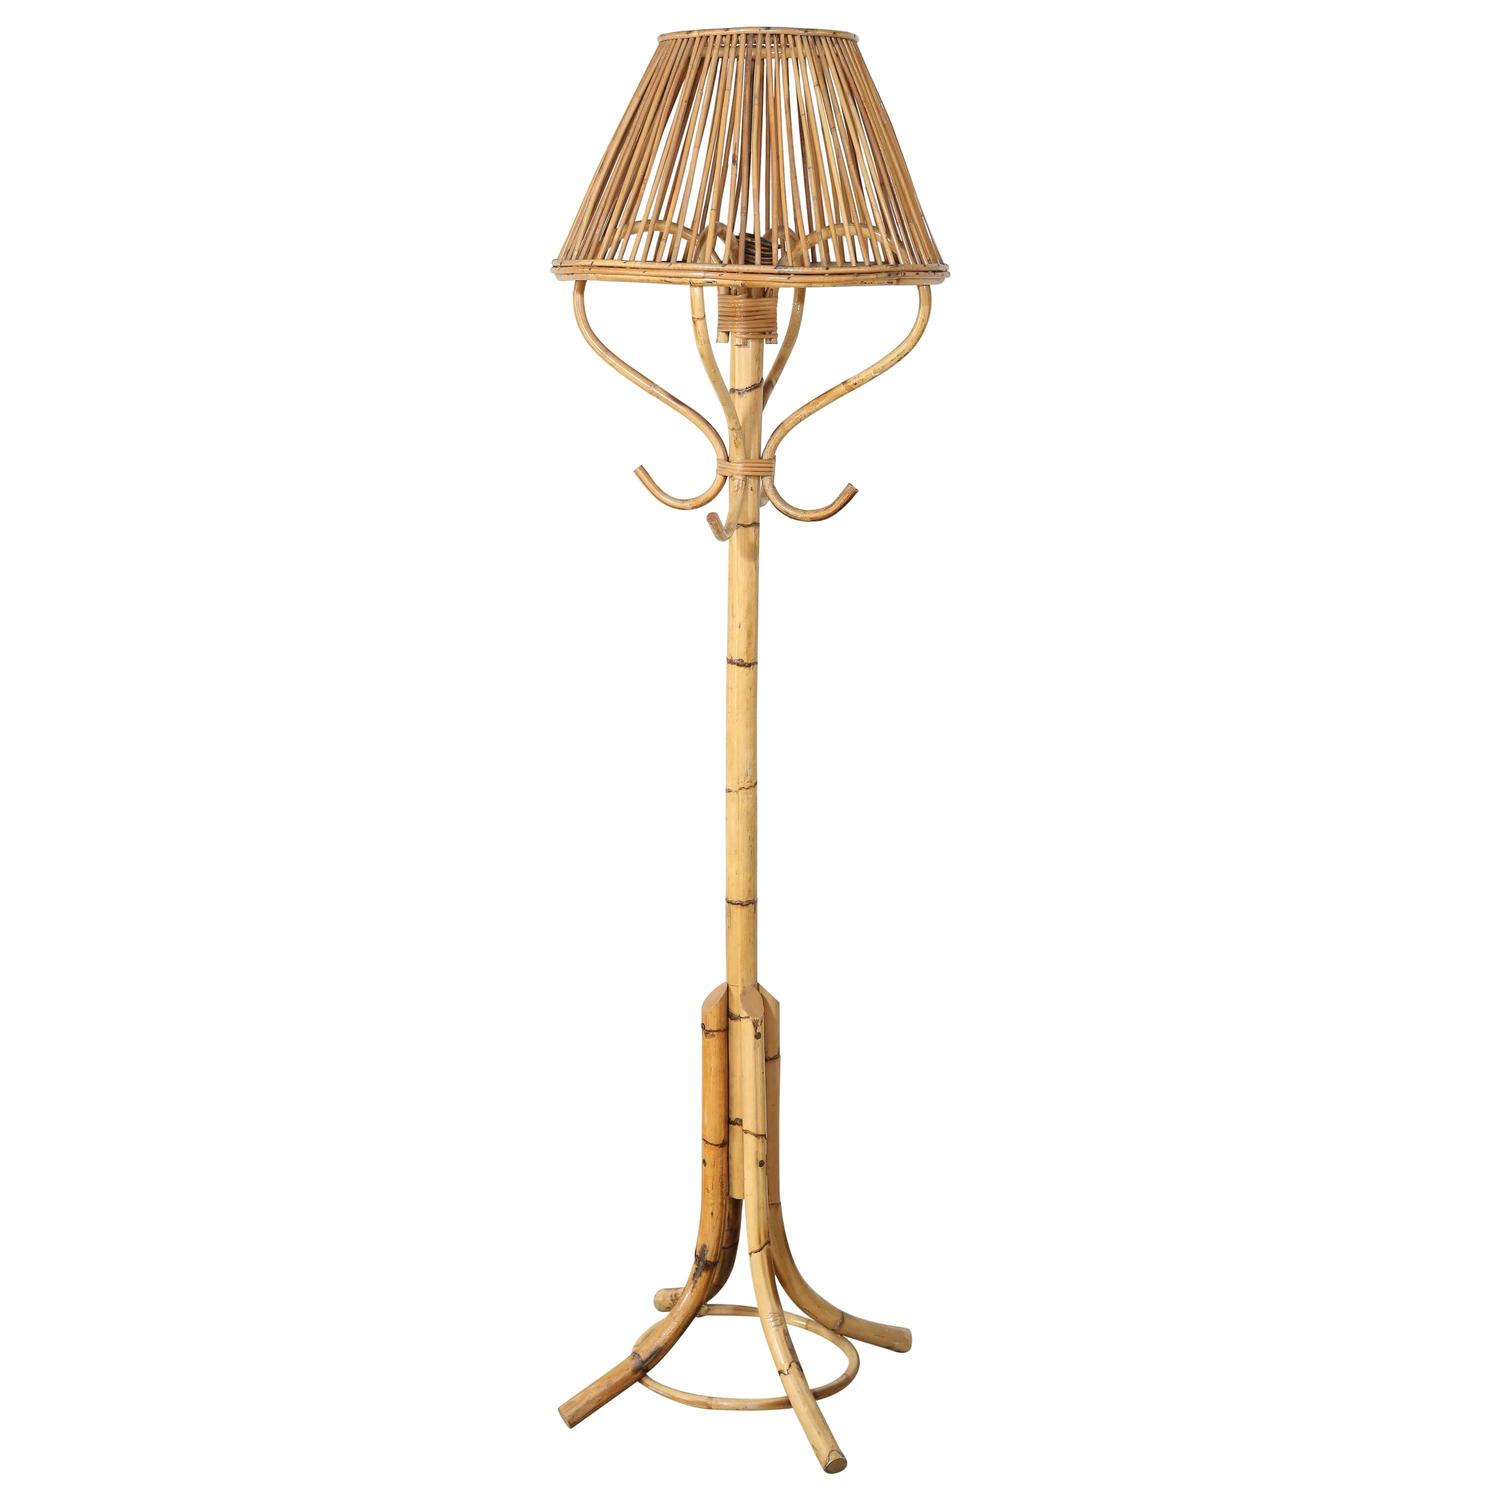 Vintage Rattan Floor Lamp For Sale at 1stdibs